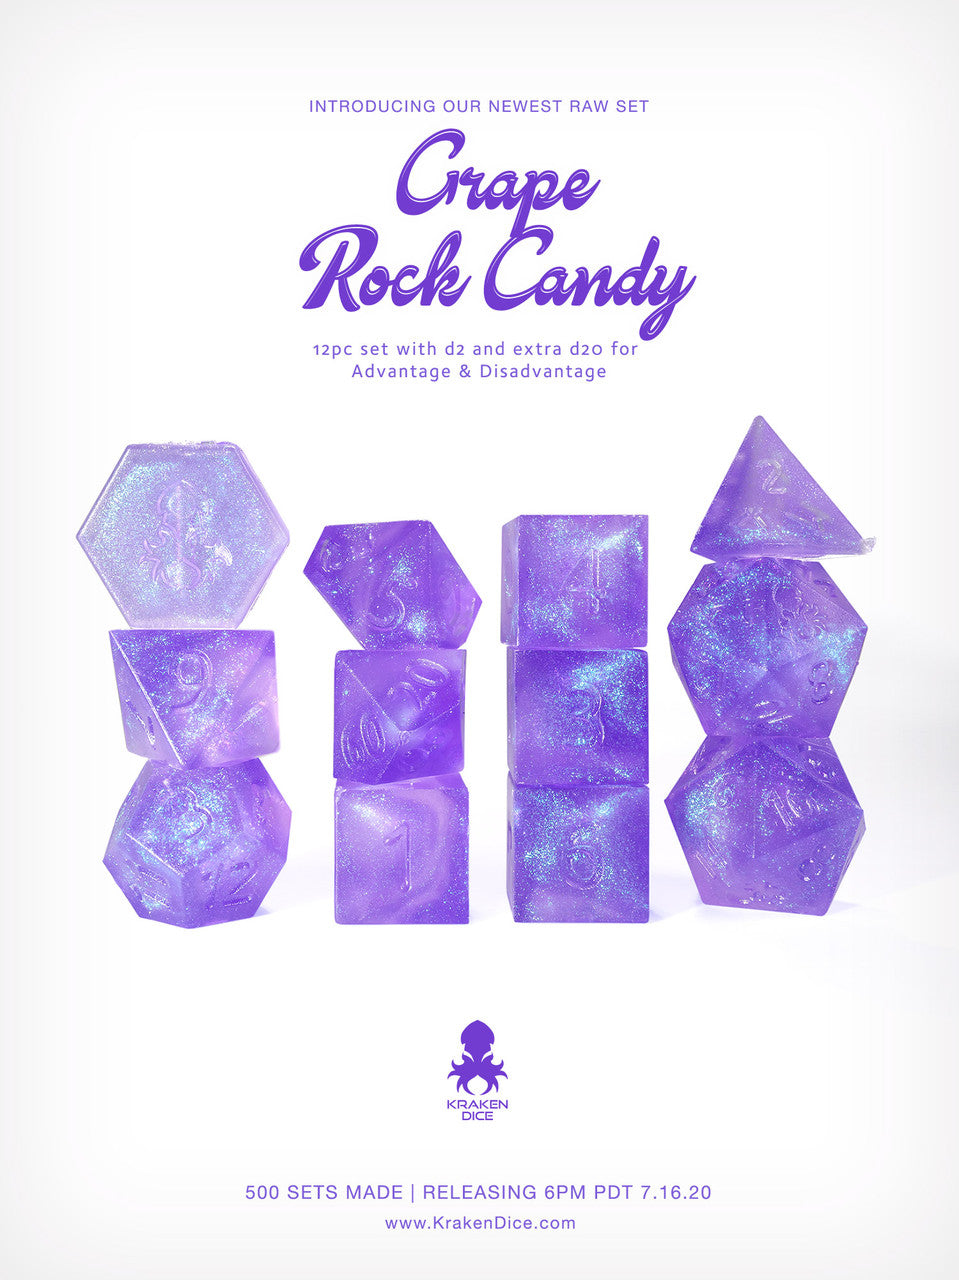 Kraken's Grape Rock Candy RAW 12pc Polyhedral Dice Set